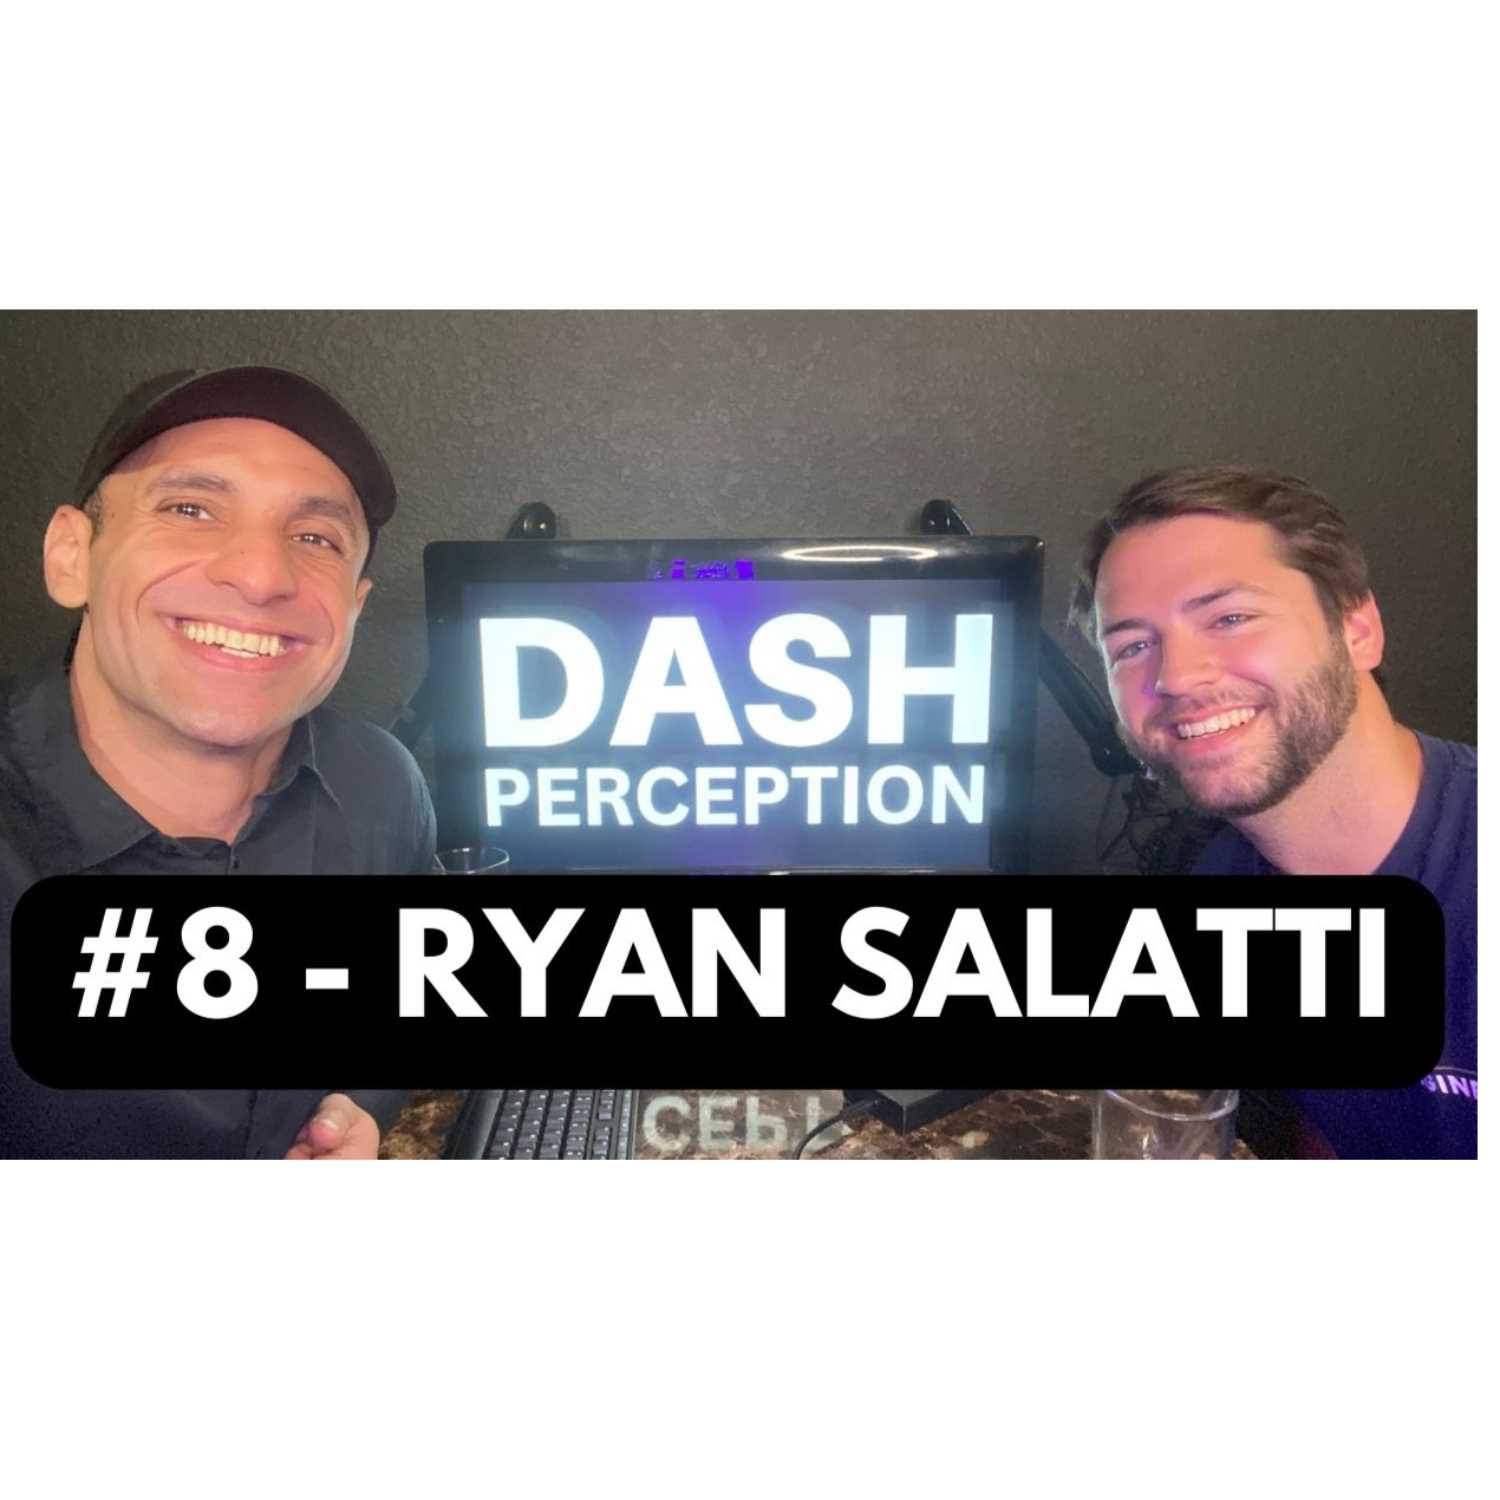 #8 - AVID PERCEPTION WITH RYAN SALATTI